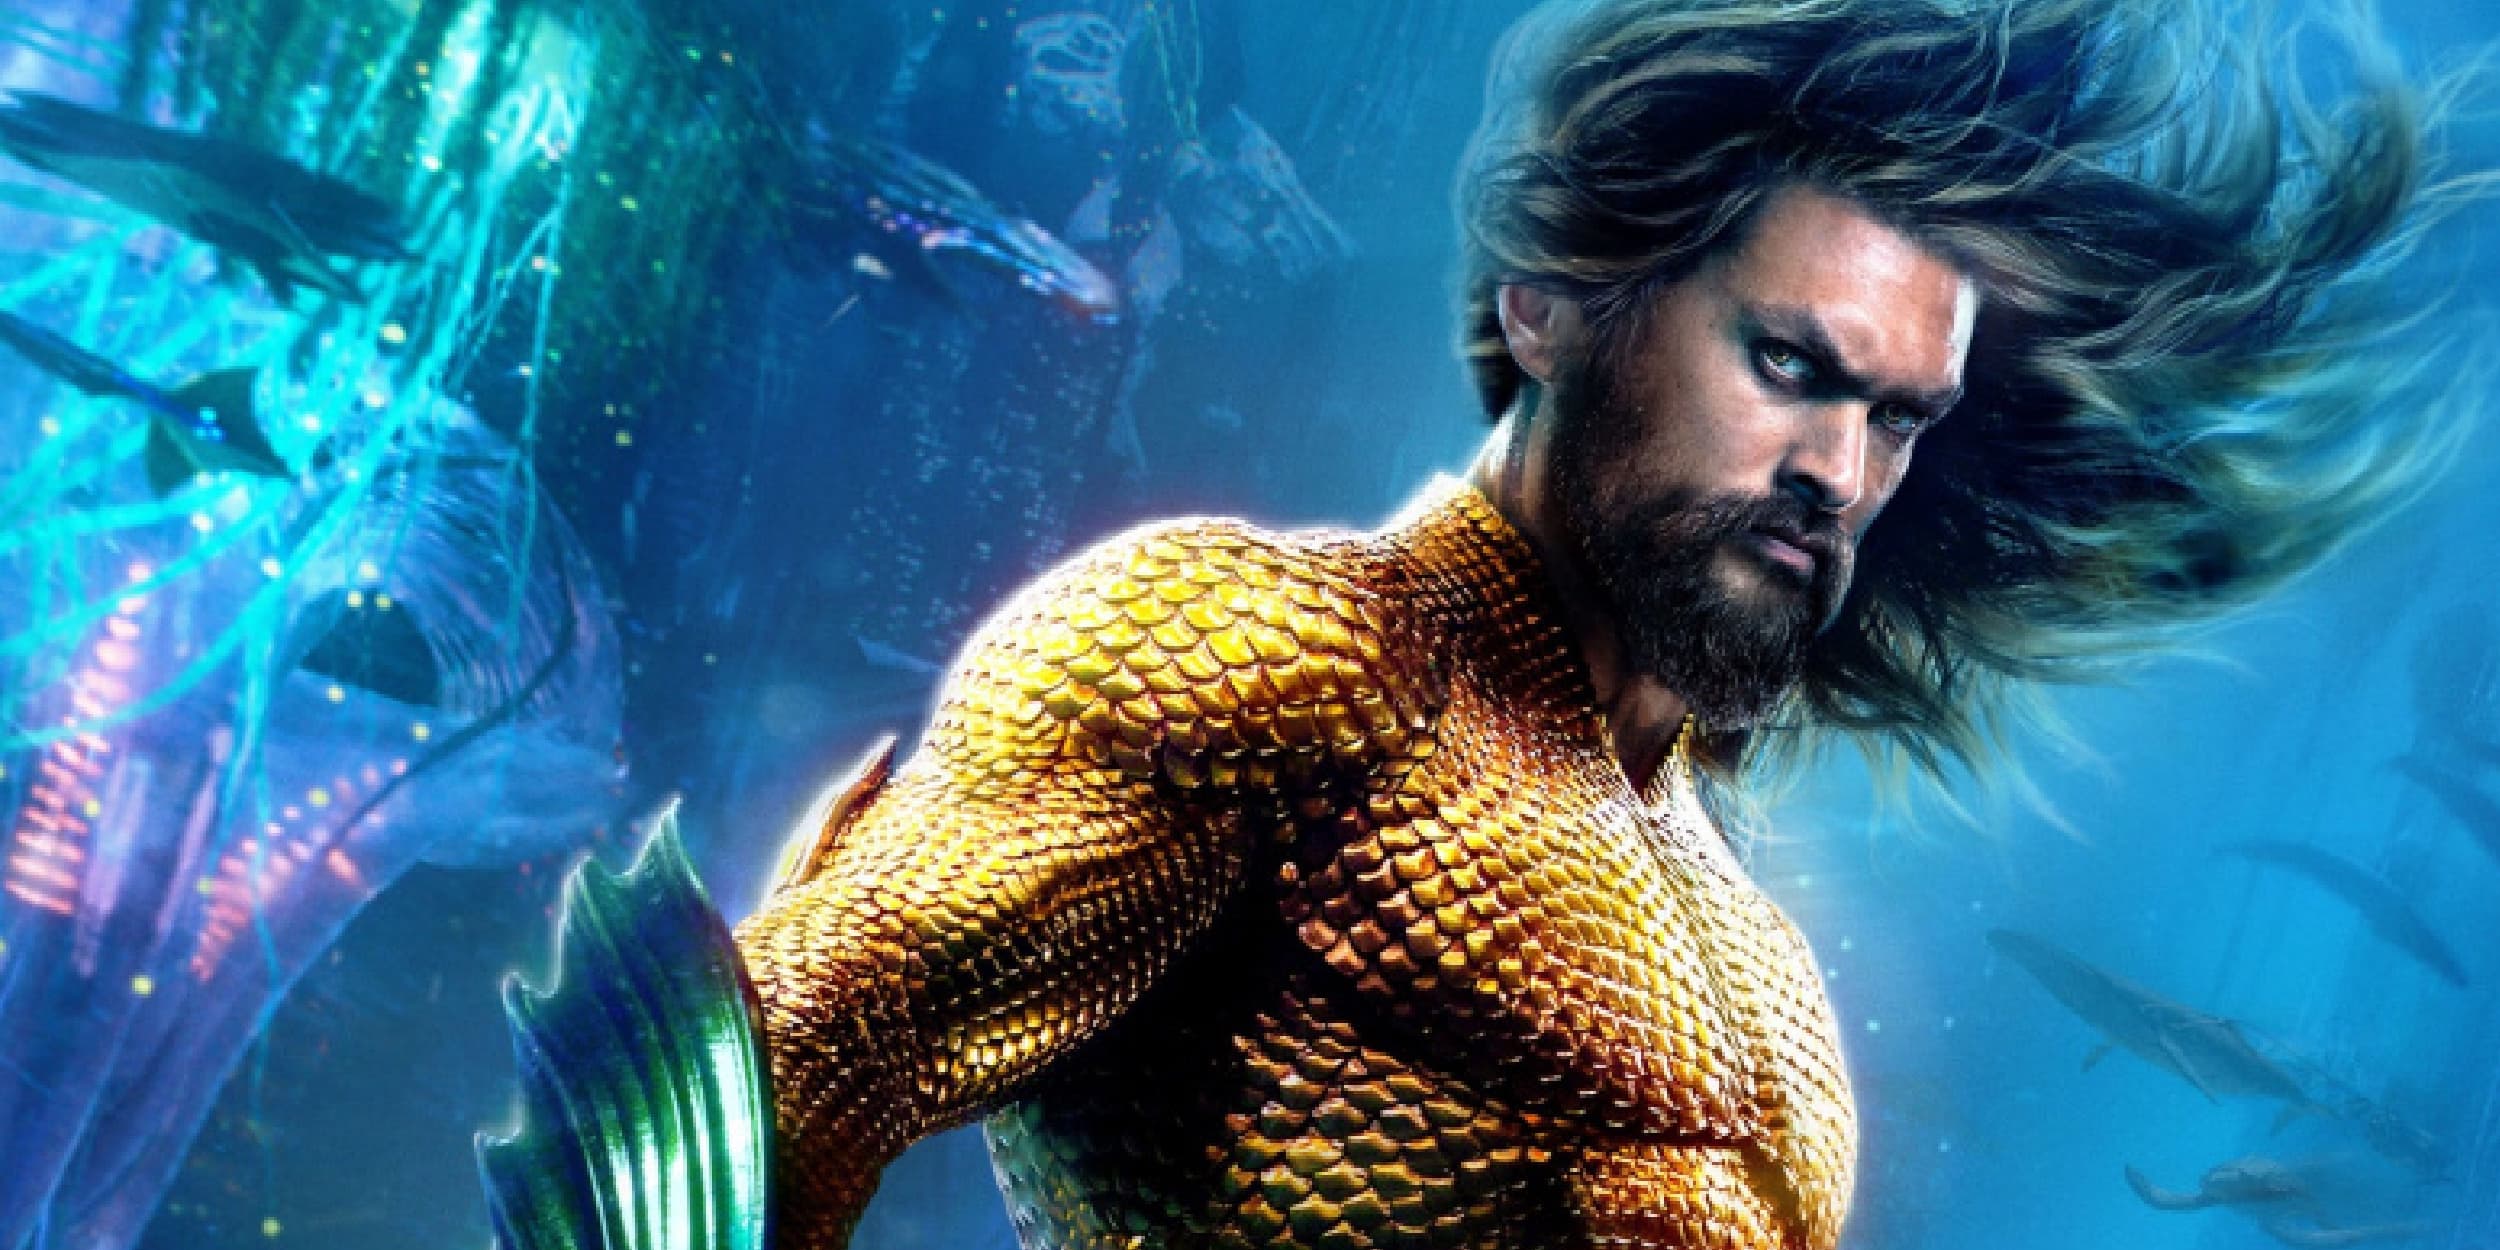 "Aquaman" holder tidsplanen uansett streik: "Aquaman" del 2 holder seg til planlagt premieredato